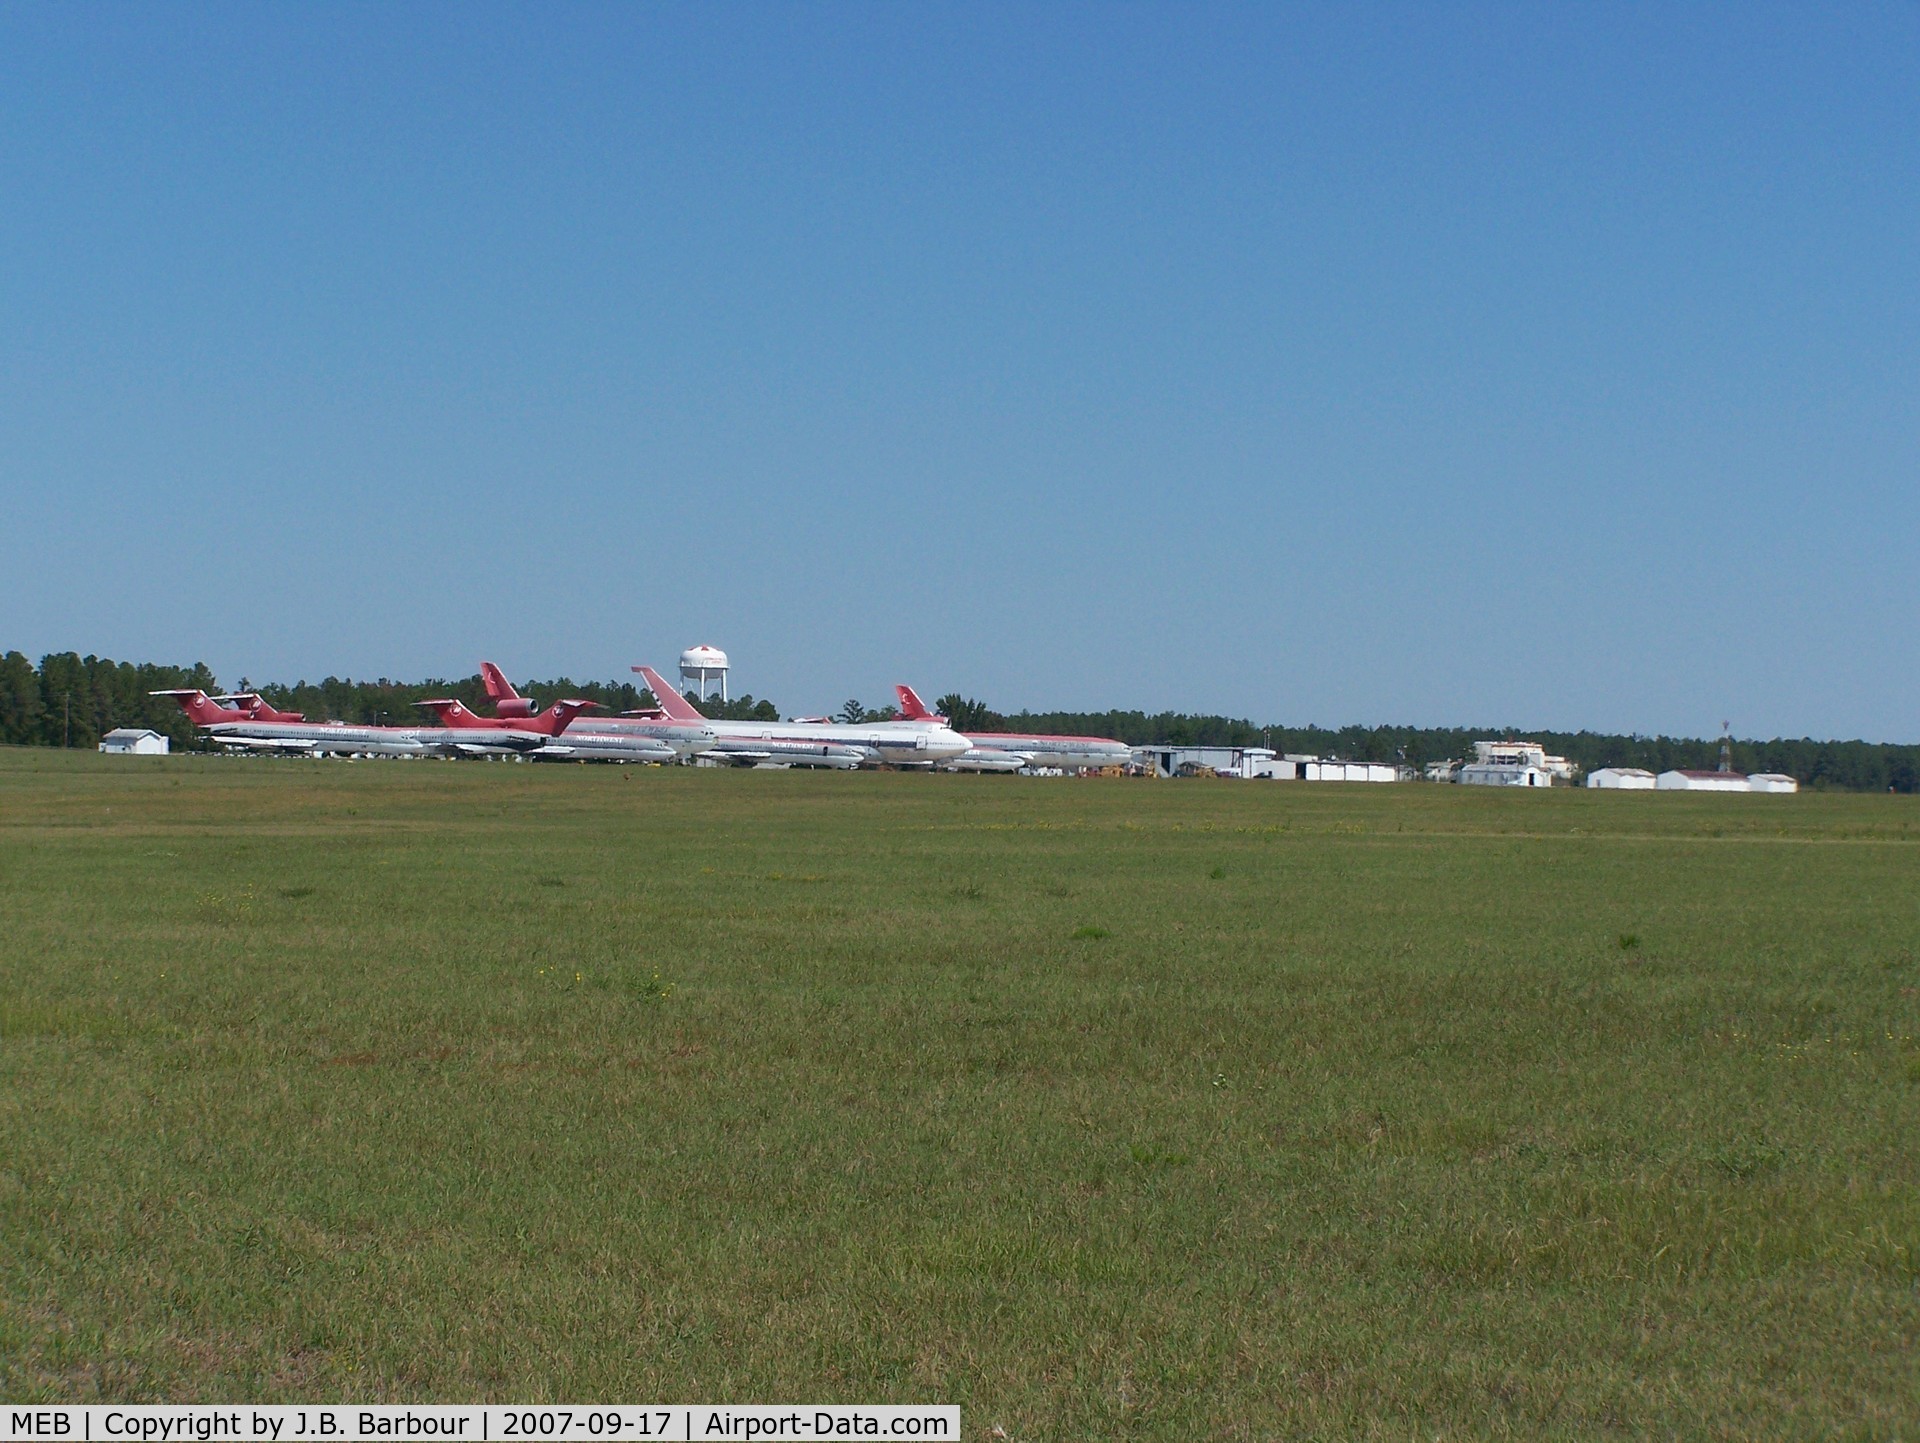 Laurinburg-maxton Airport (MEB) - The Northwest grave yard of North Carolina.